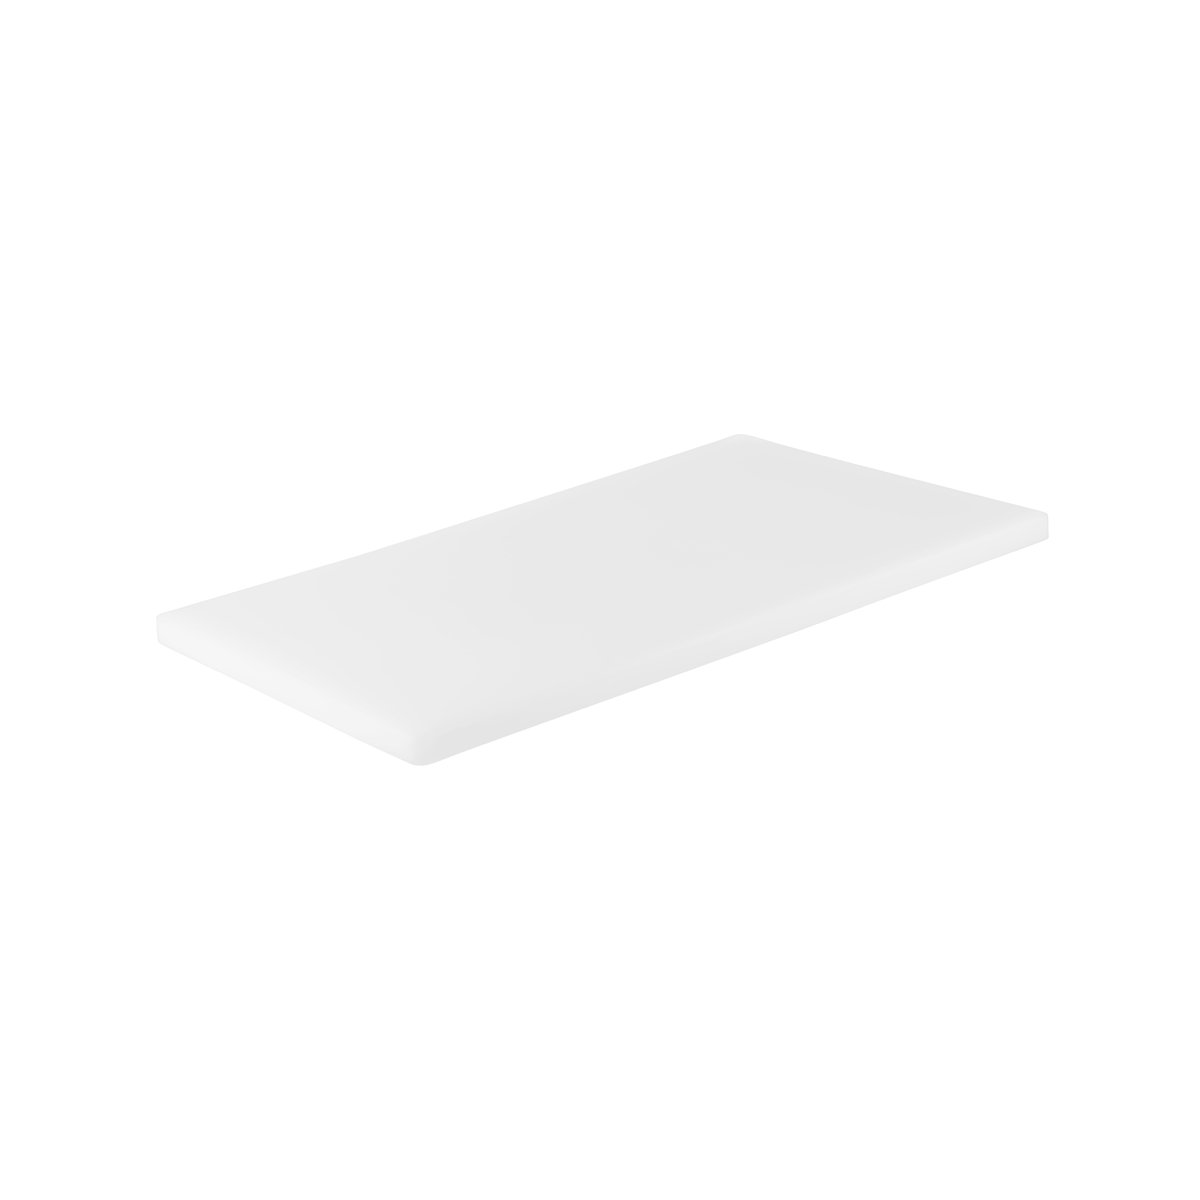 04360 Chef Inox Cutting Board Polyethylene White 380x510x20mm Tomkin Australia Hospitality Supplies